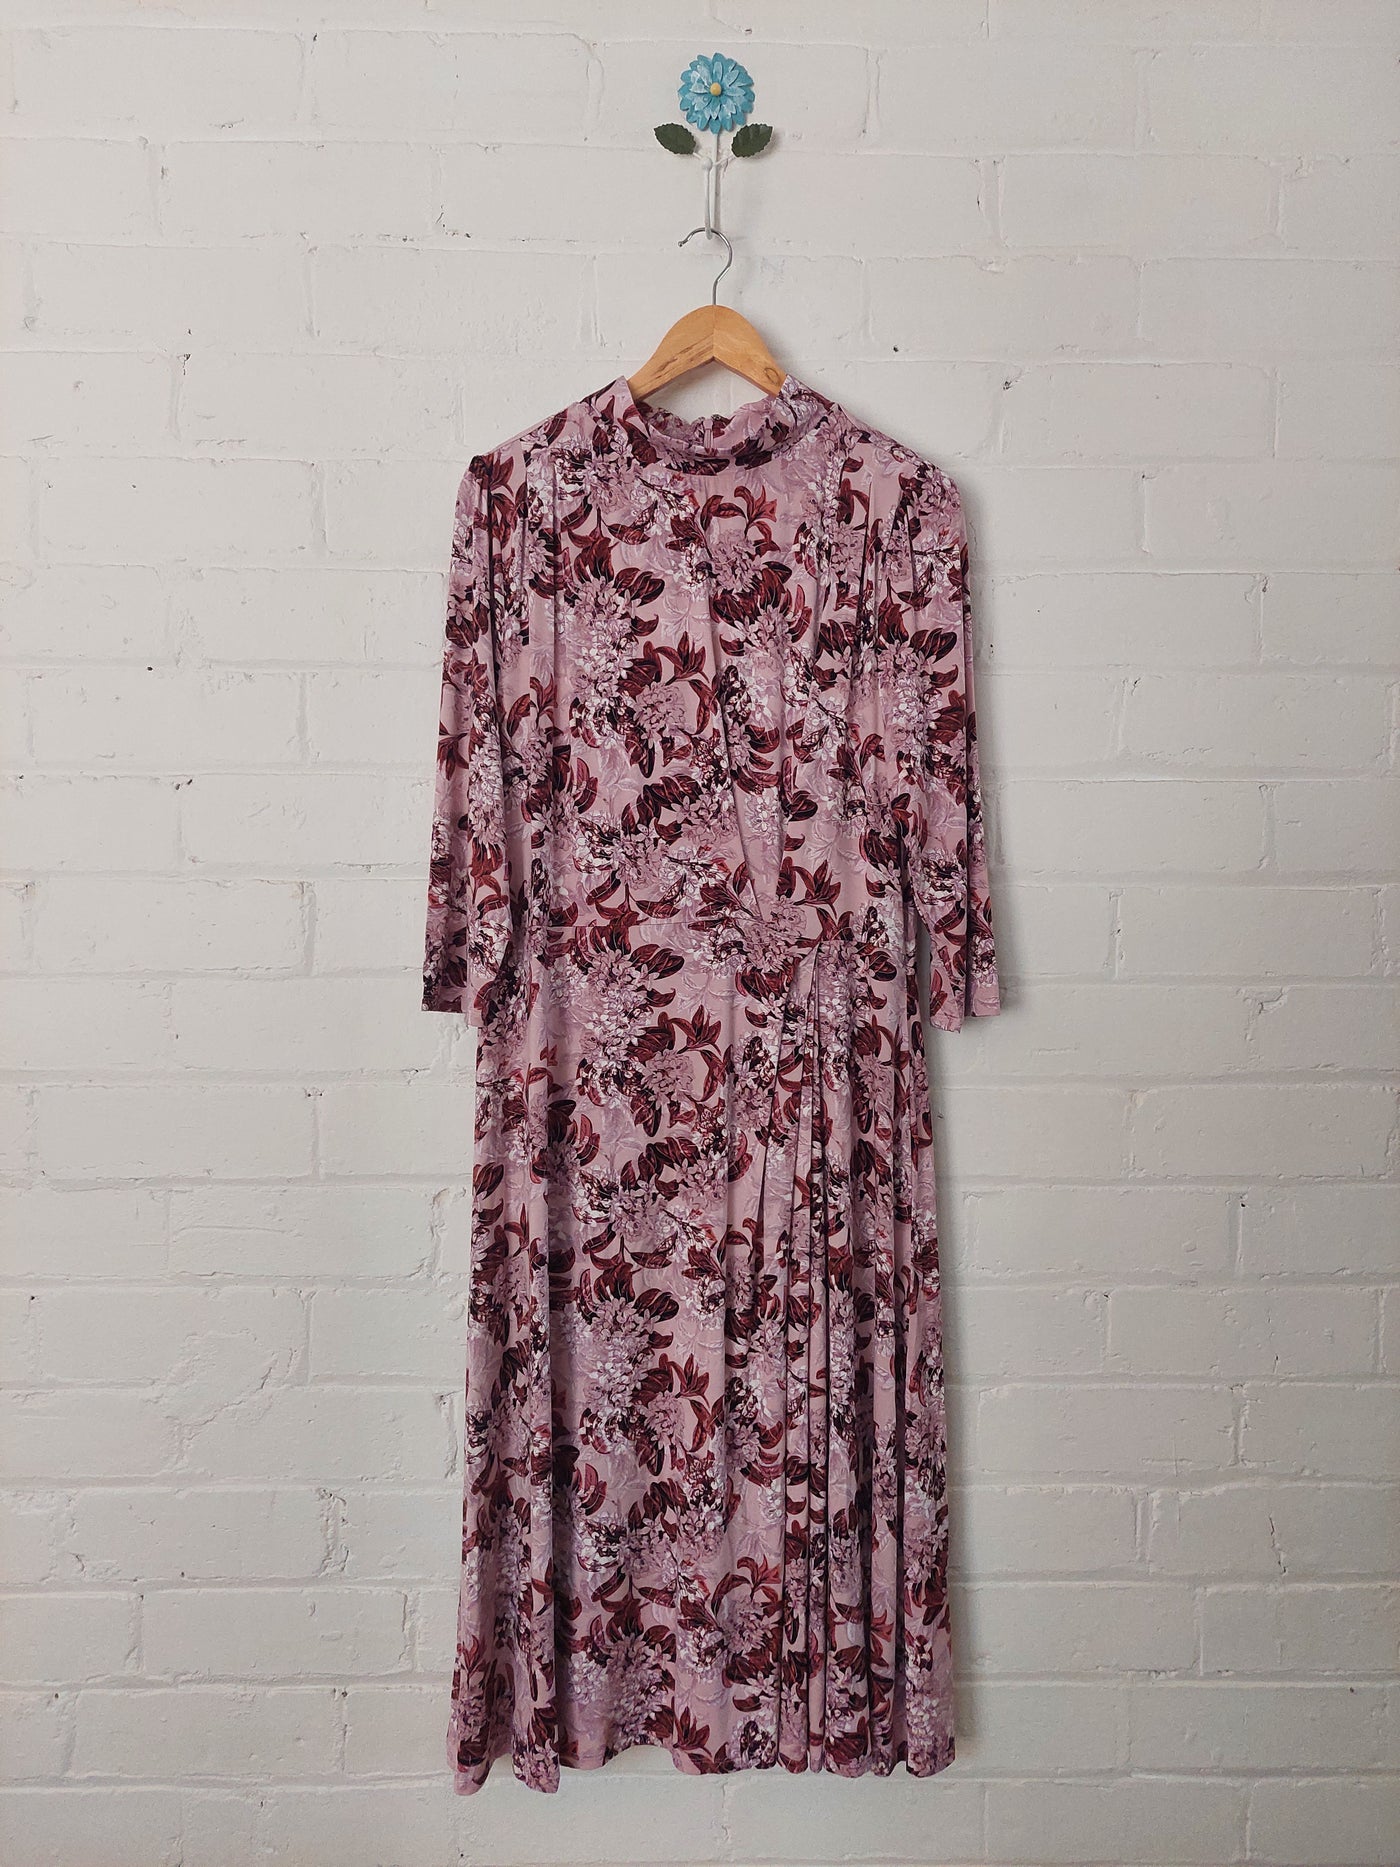 David Lawrence BNWT 'Malo' Jersey Dress - Blush Multi, Size L (AU 12)